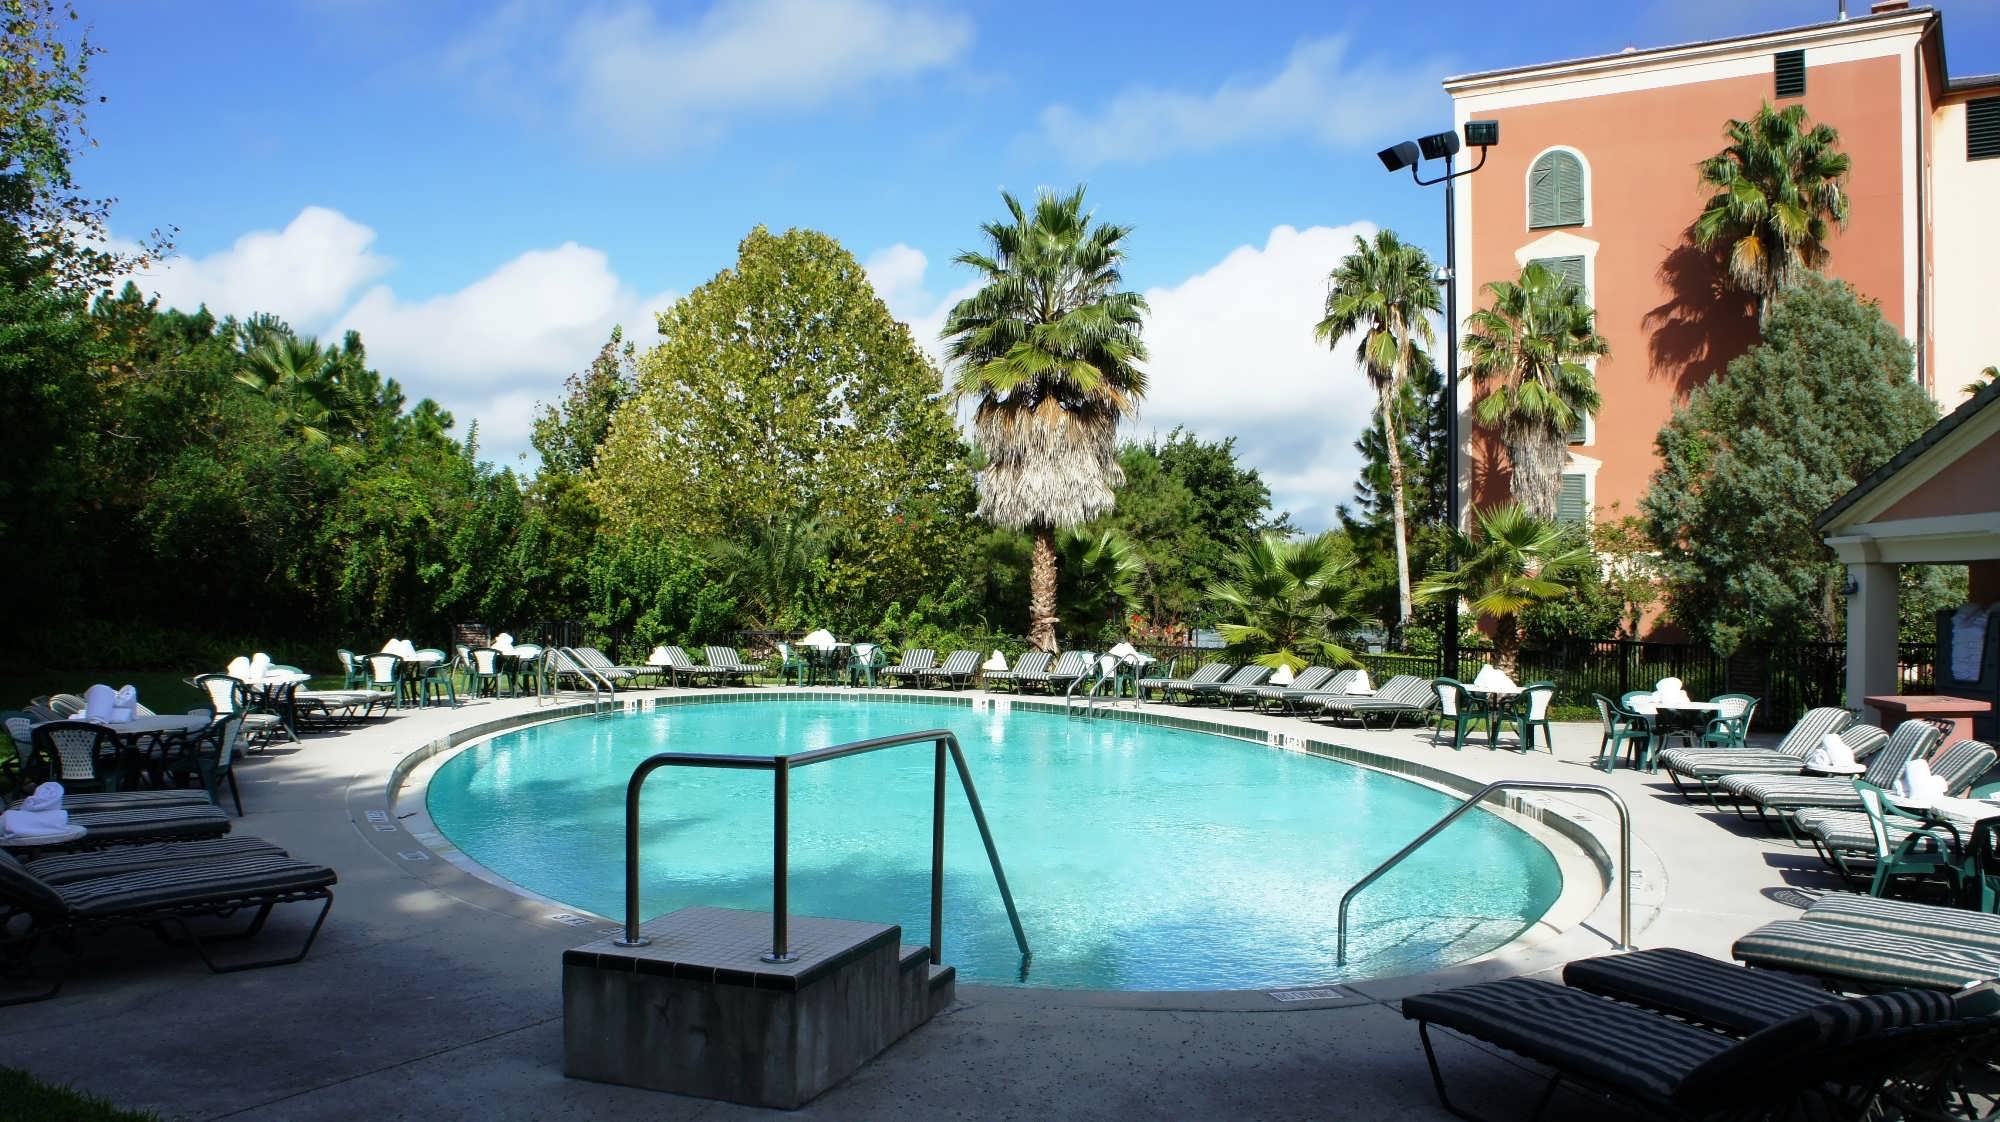 Download Portofino Hotel Pool Pictures